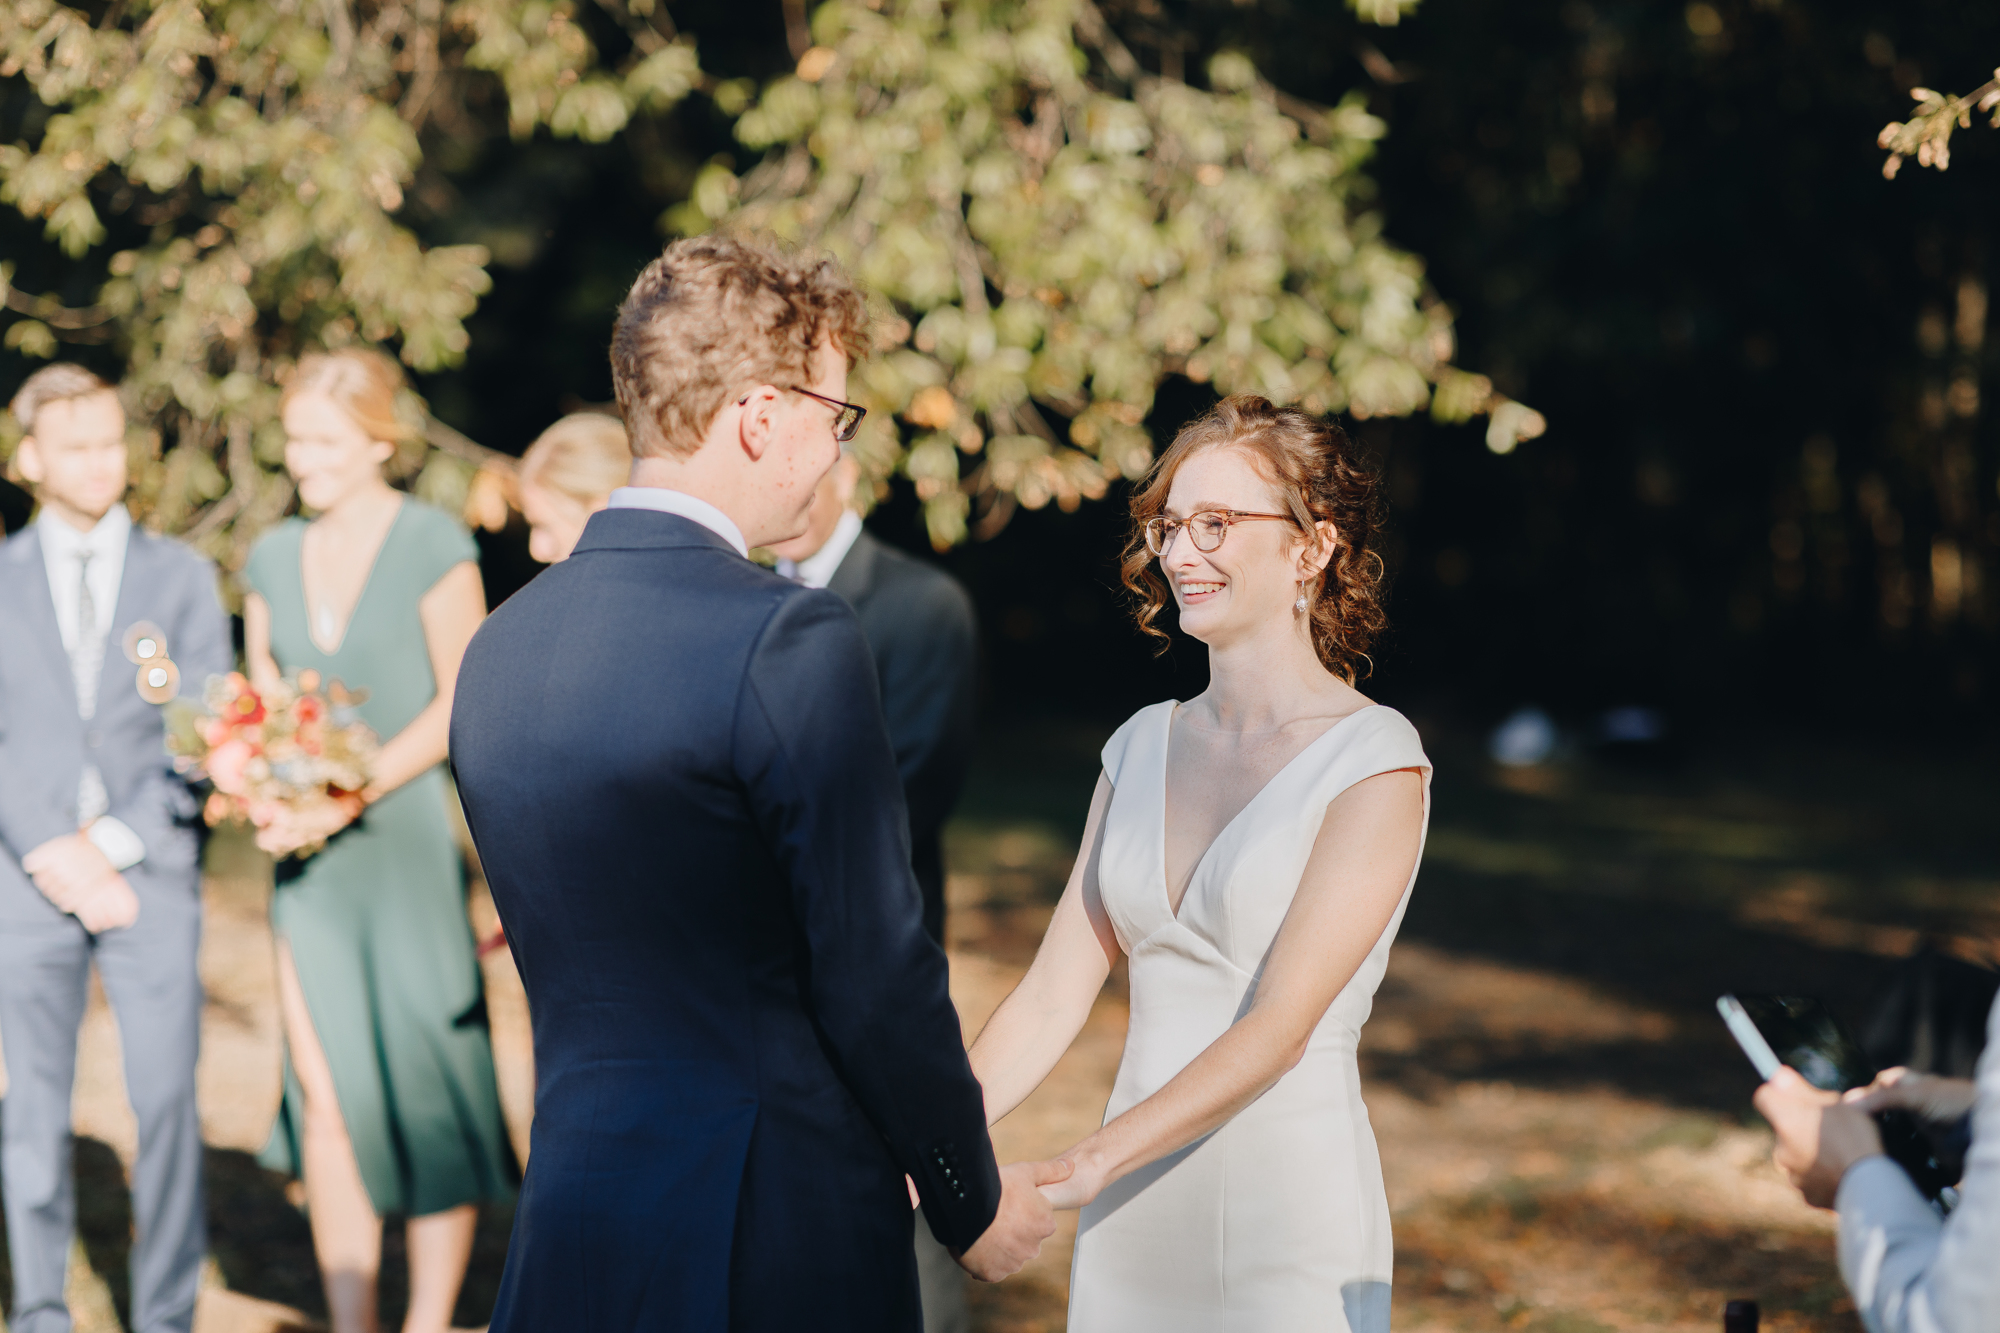 Beautiful micro-wedding ceremony in Prospect Park